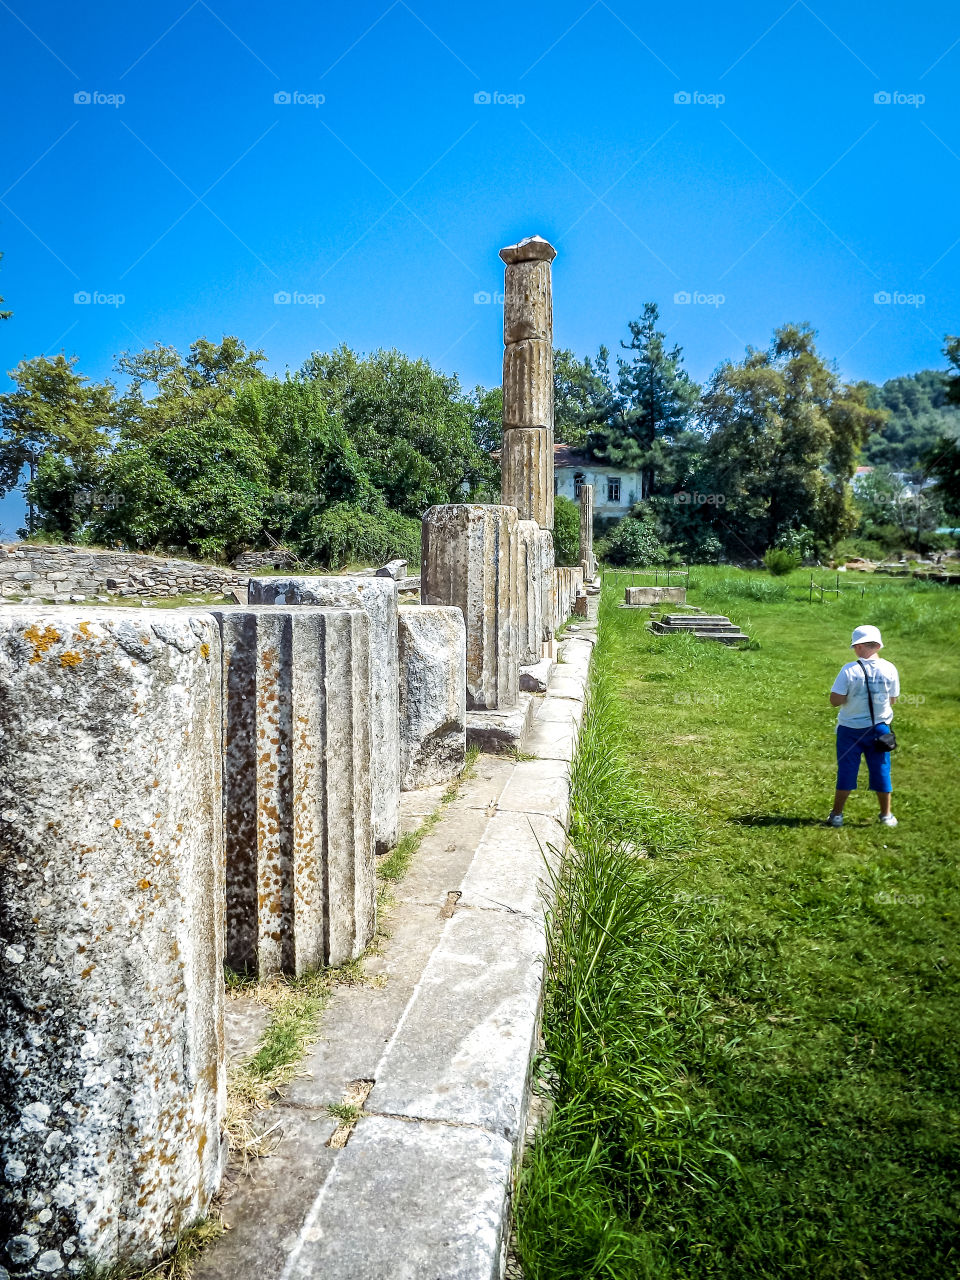  

Ruins of ancient Agora in Thassos, Limenas, Greece.